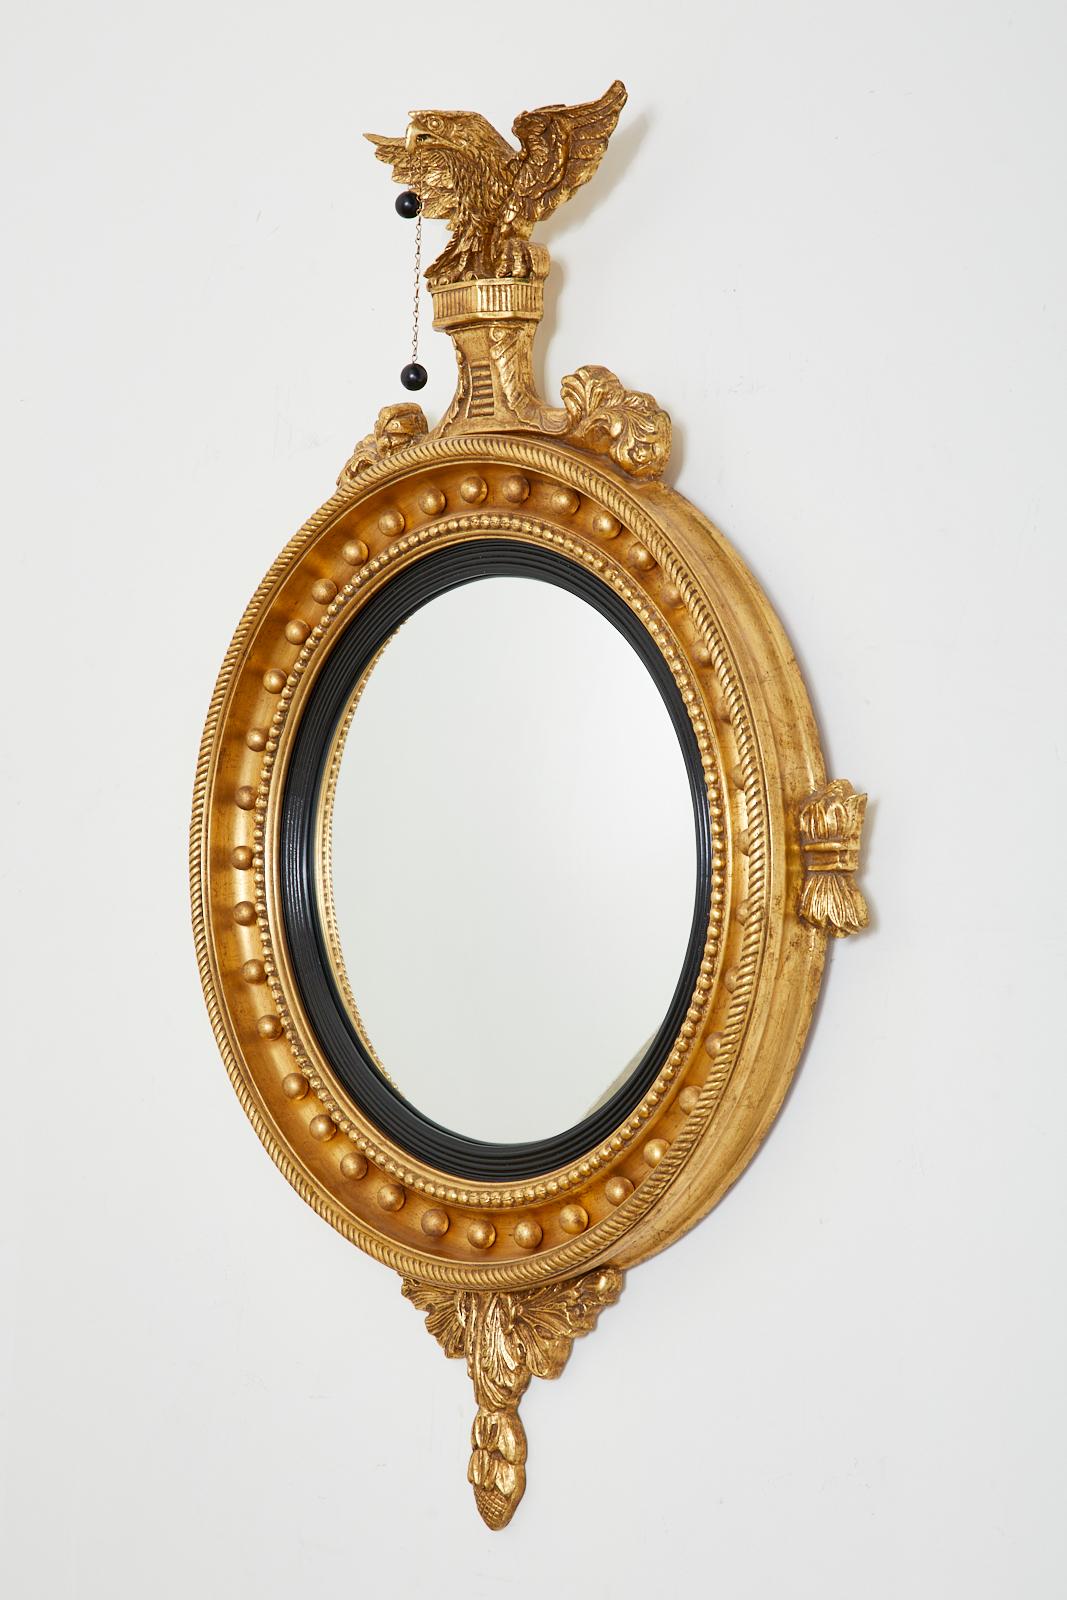 American English Regency Style Giltwood Convex Girandole Mirror For Sale